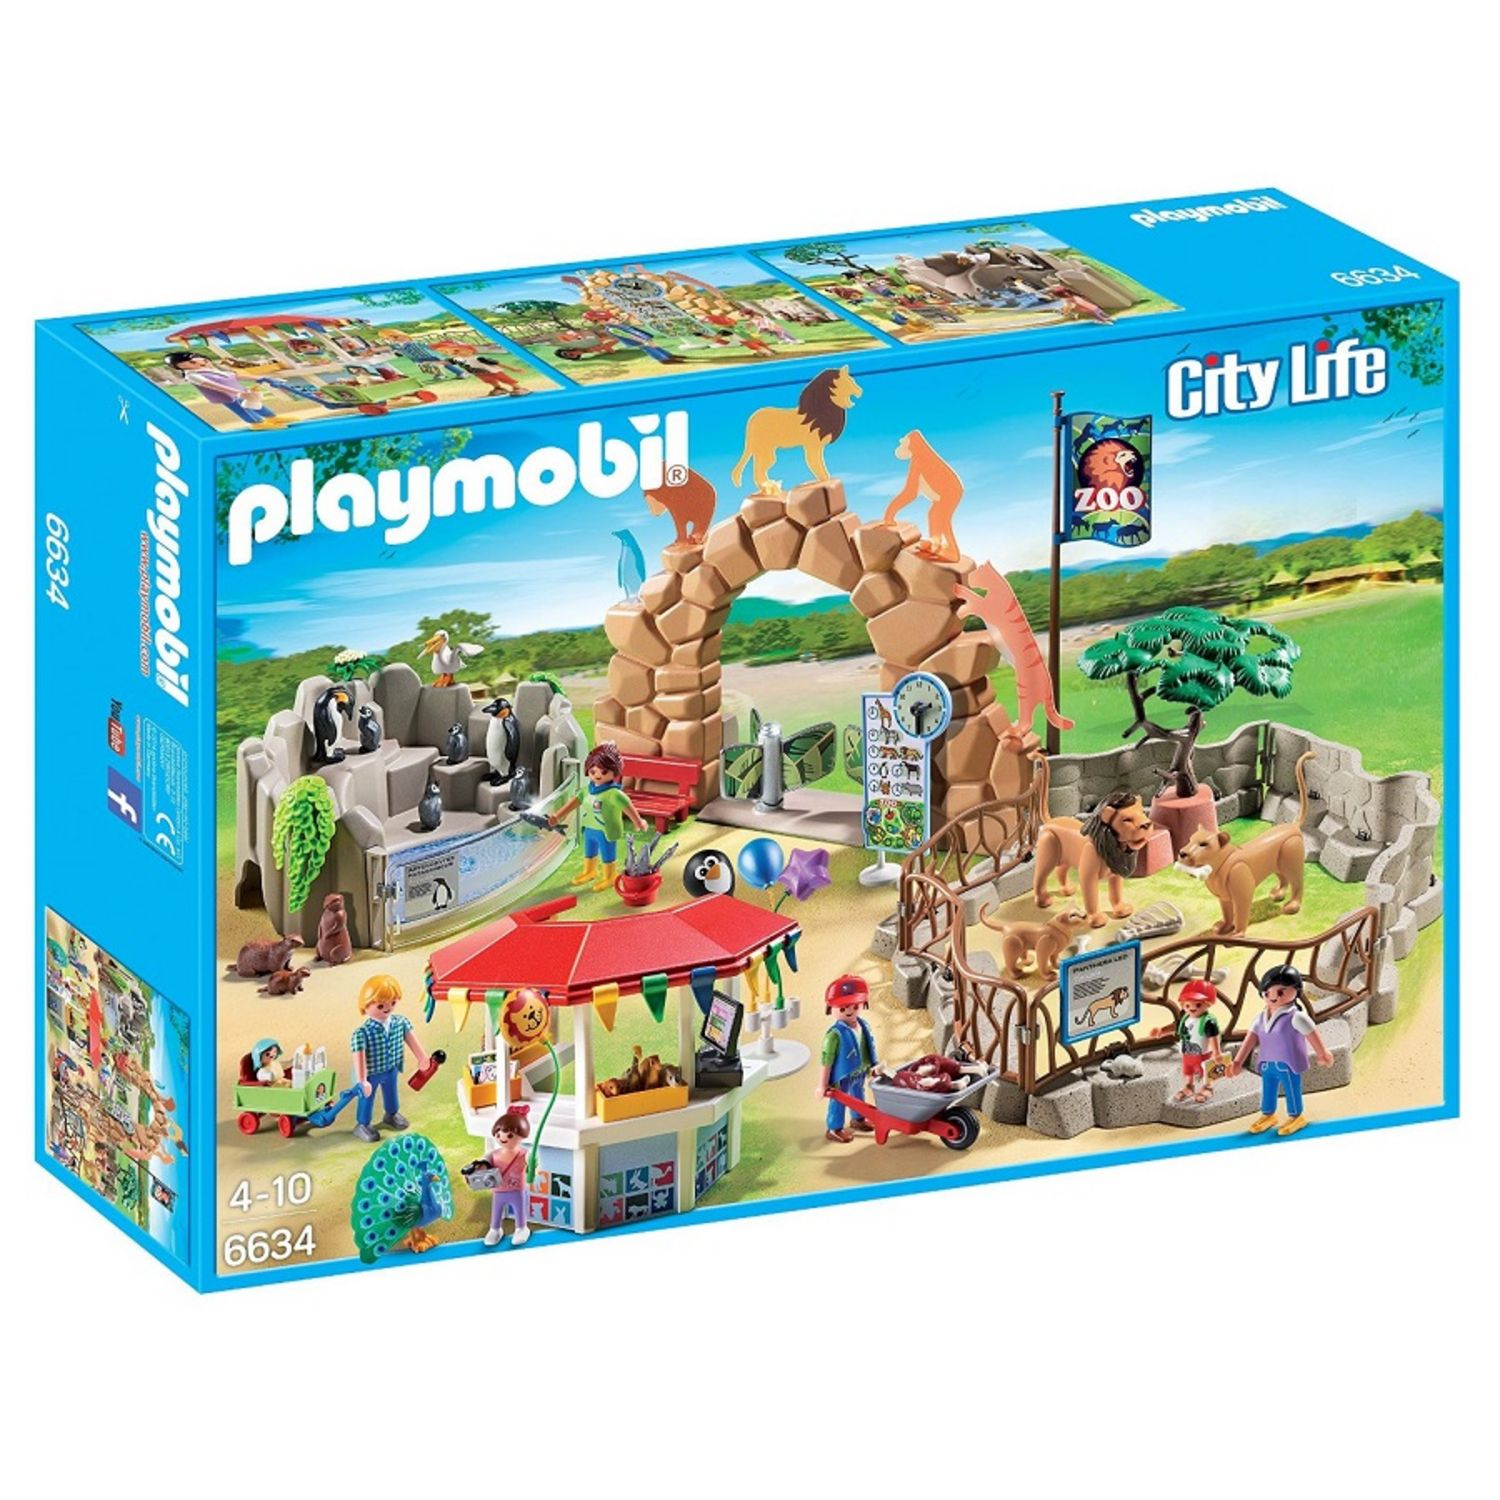 Playmobil animaux - Playmobil